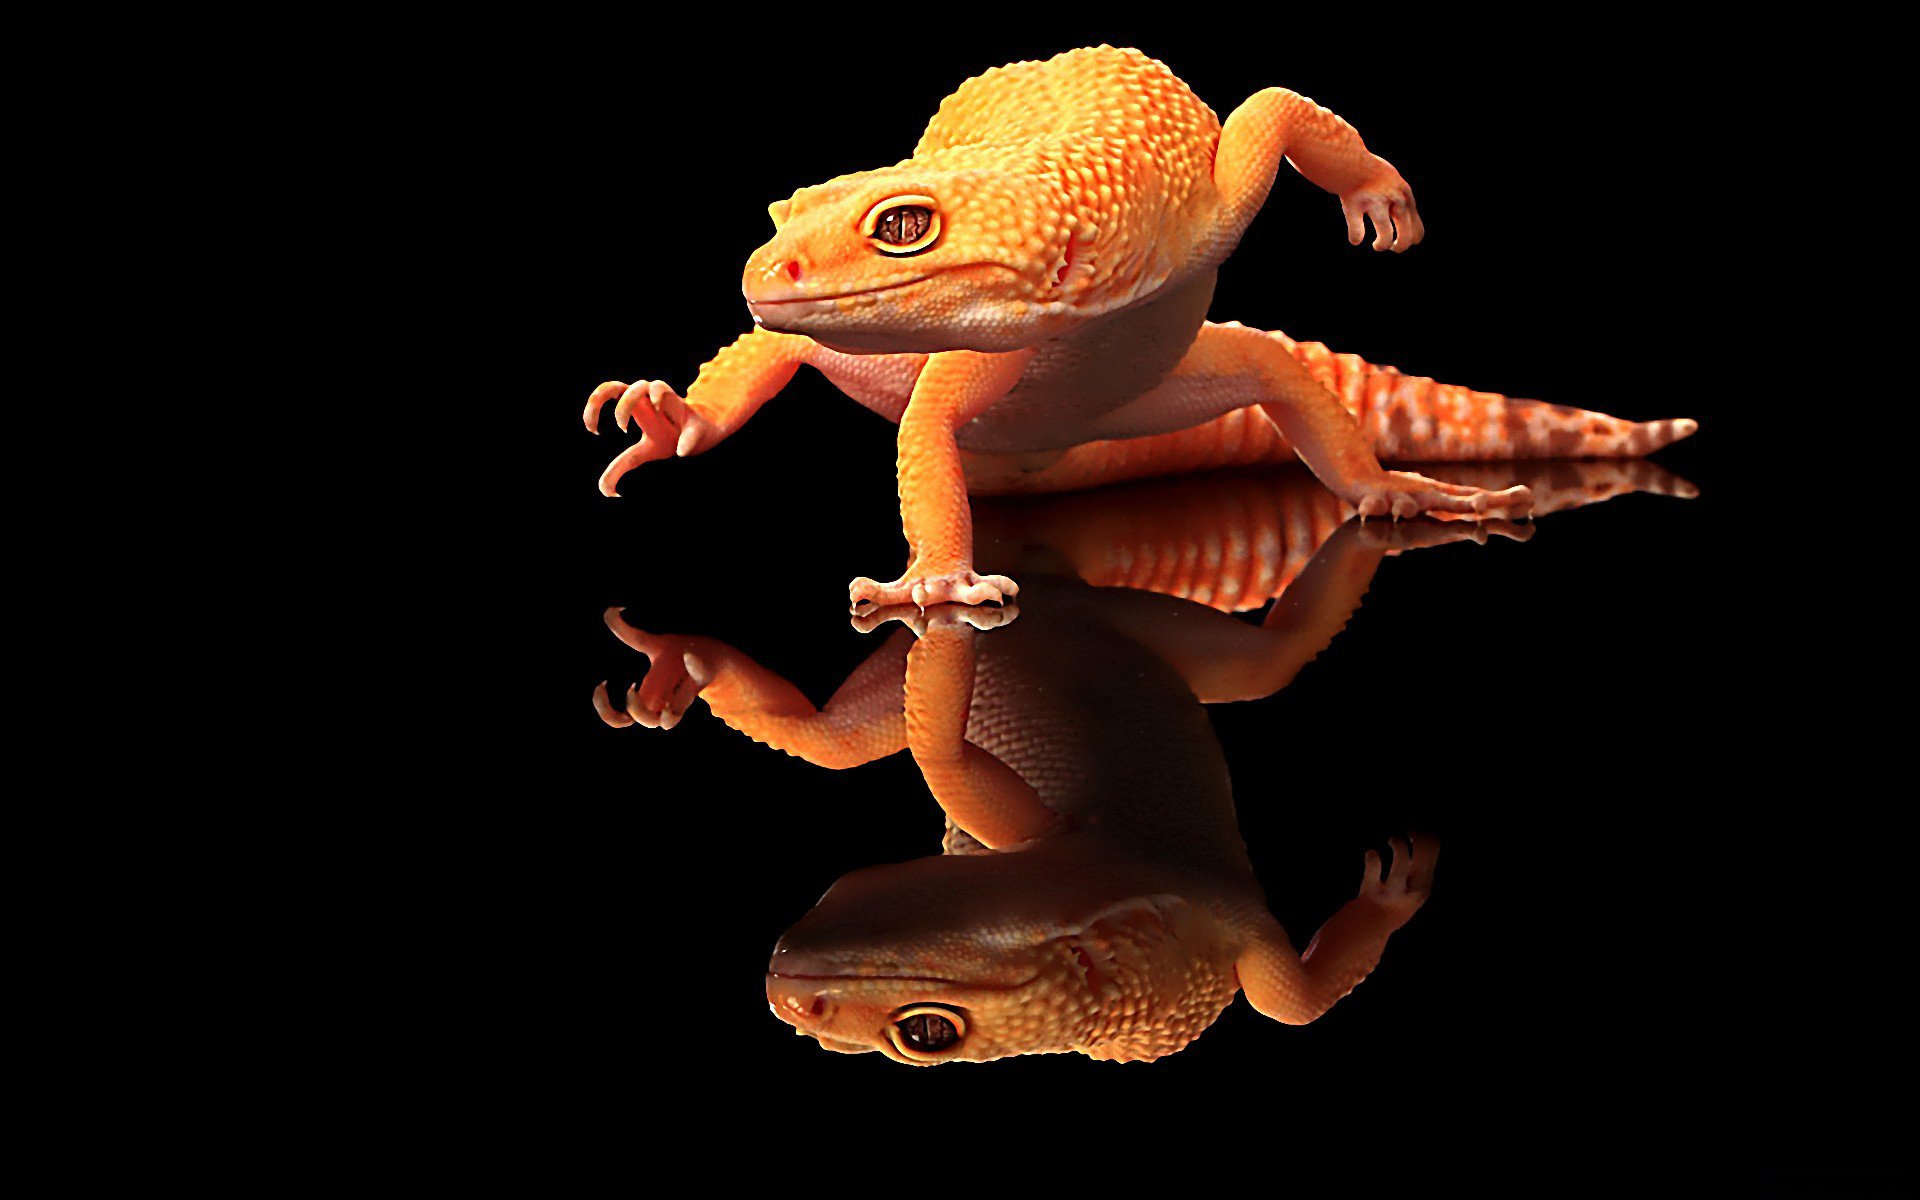 leopard gecko wallpaper,gecko,reptile,lizard,shrub frog,tree frog